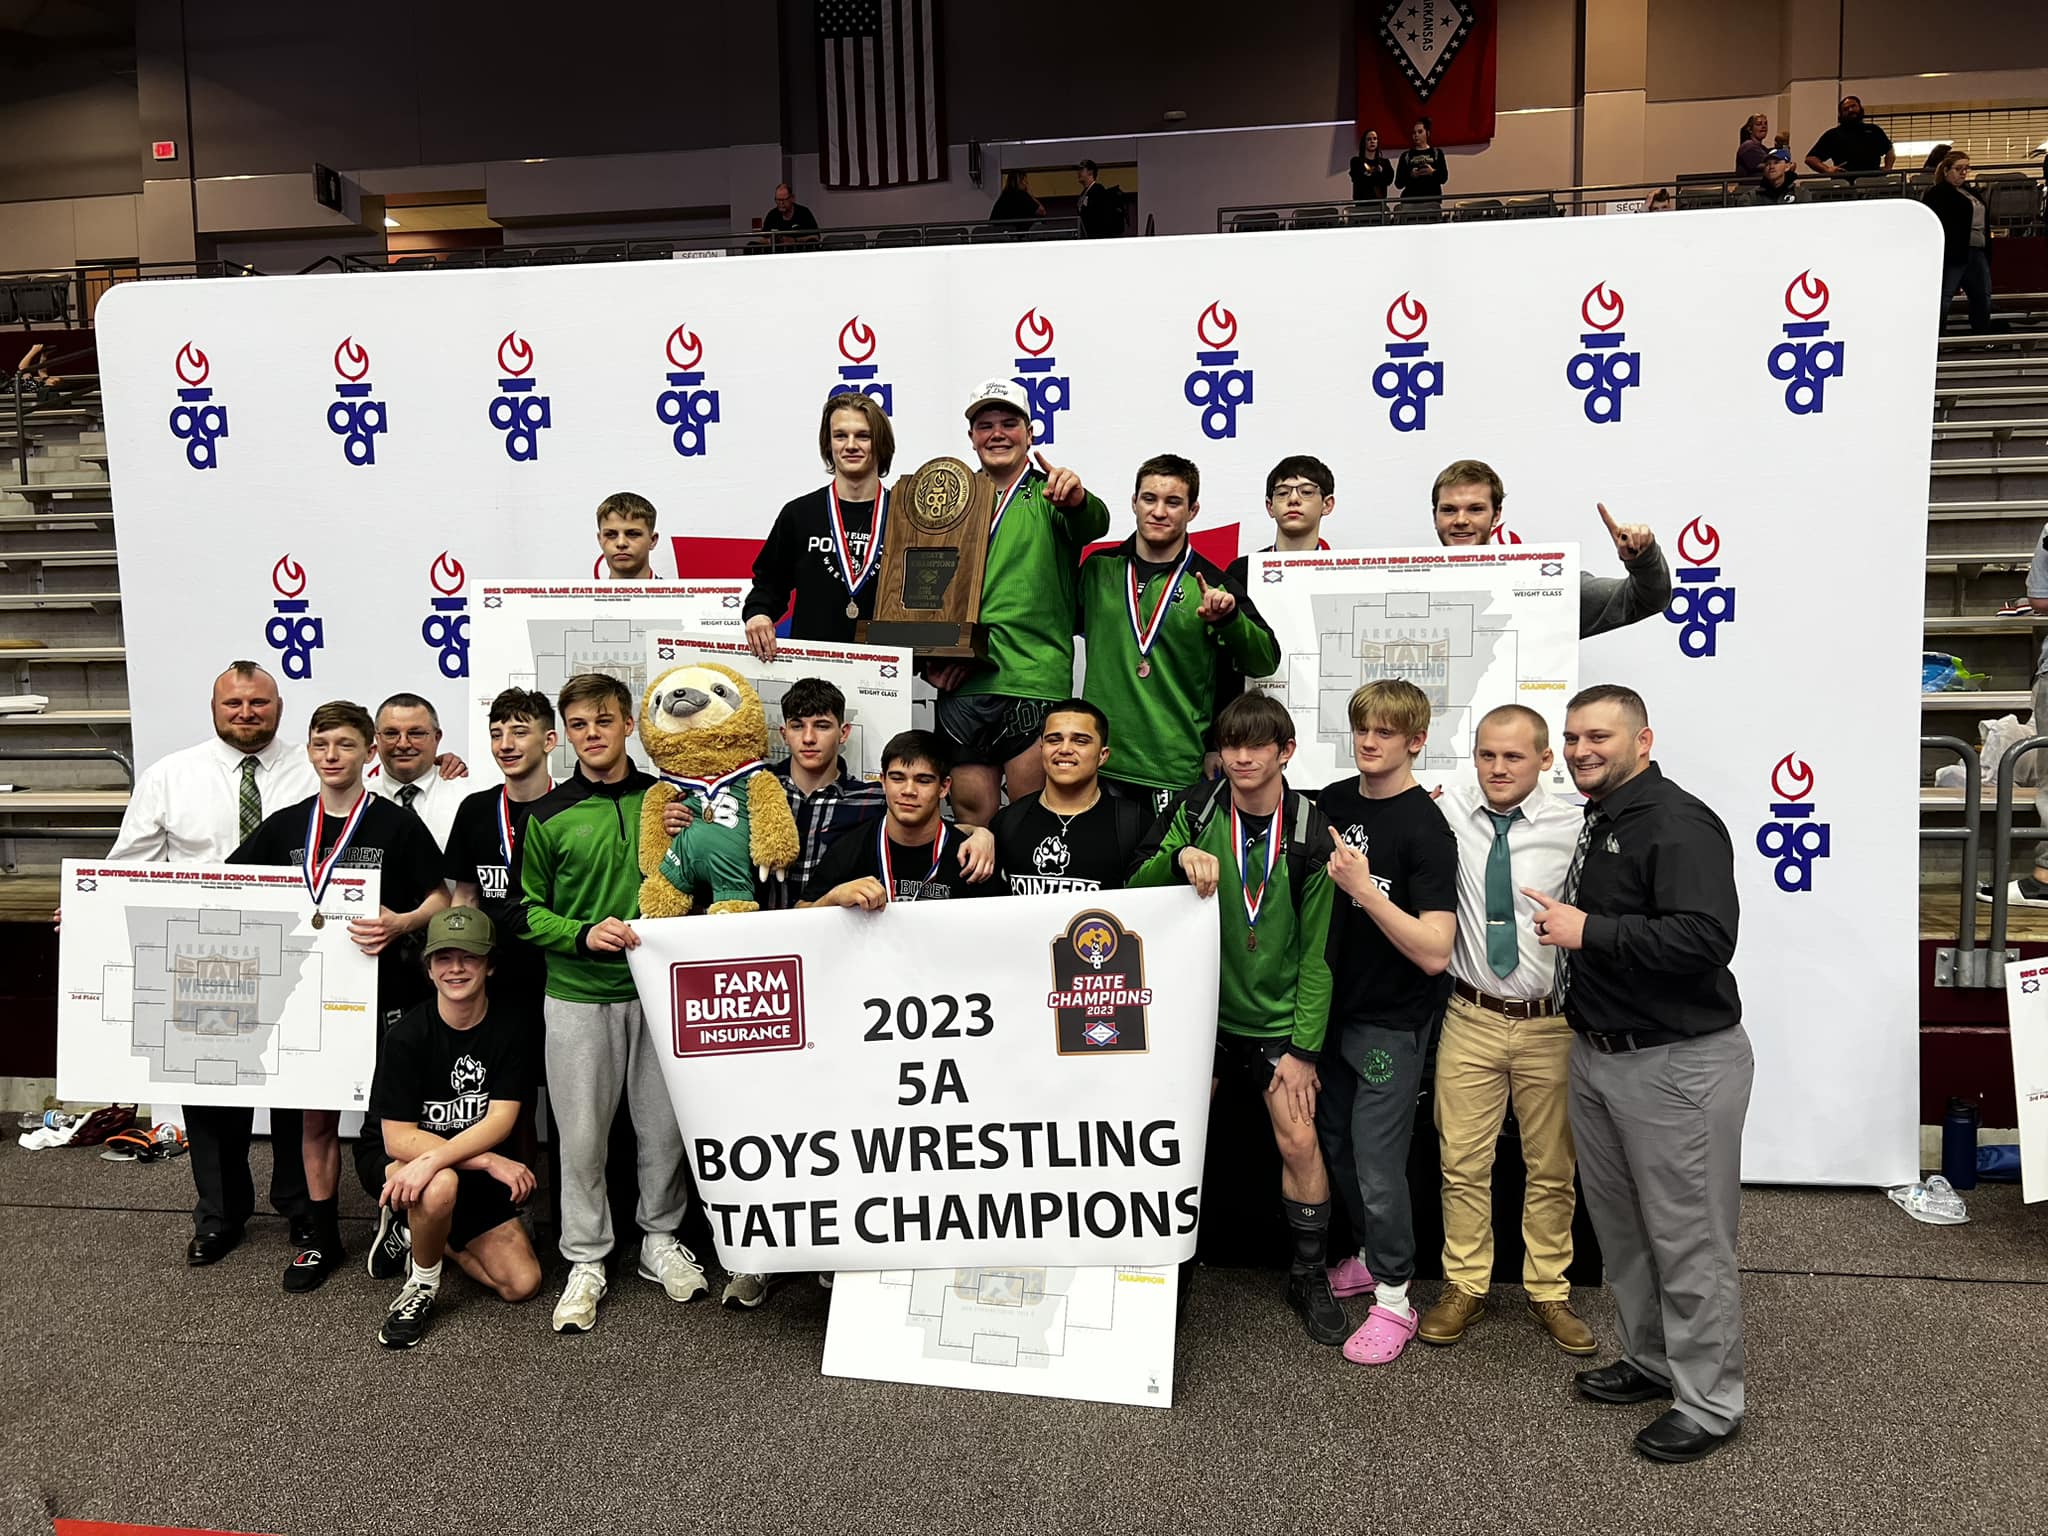 Van Buren Wrestling Program captures multiple state titles; Boys win Team State Championship